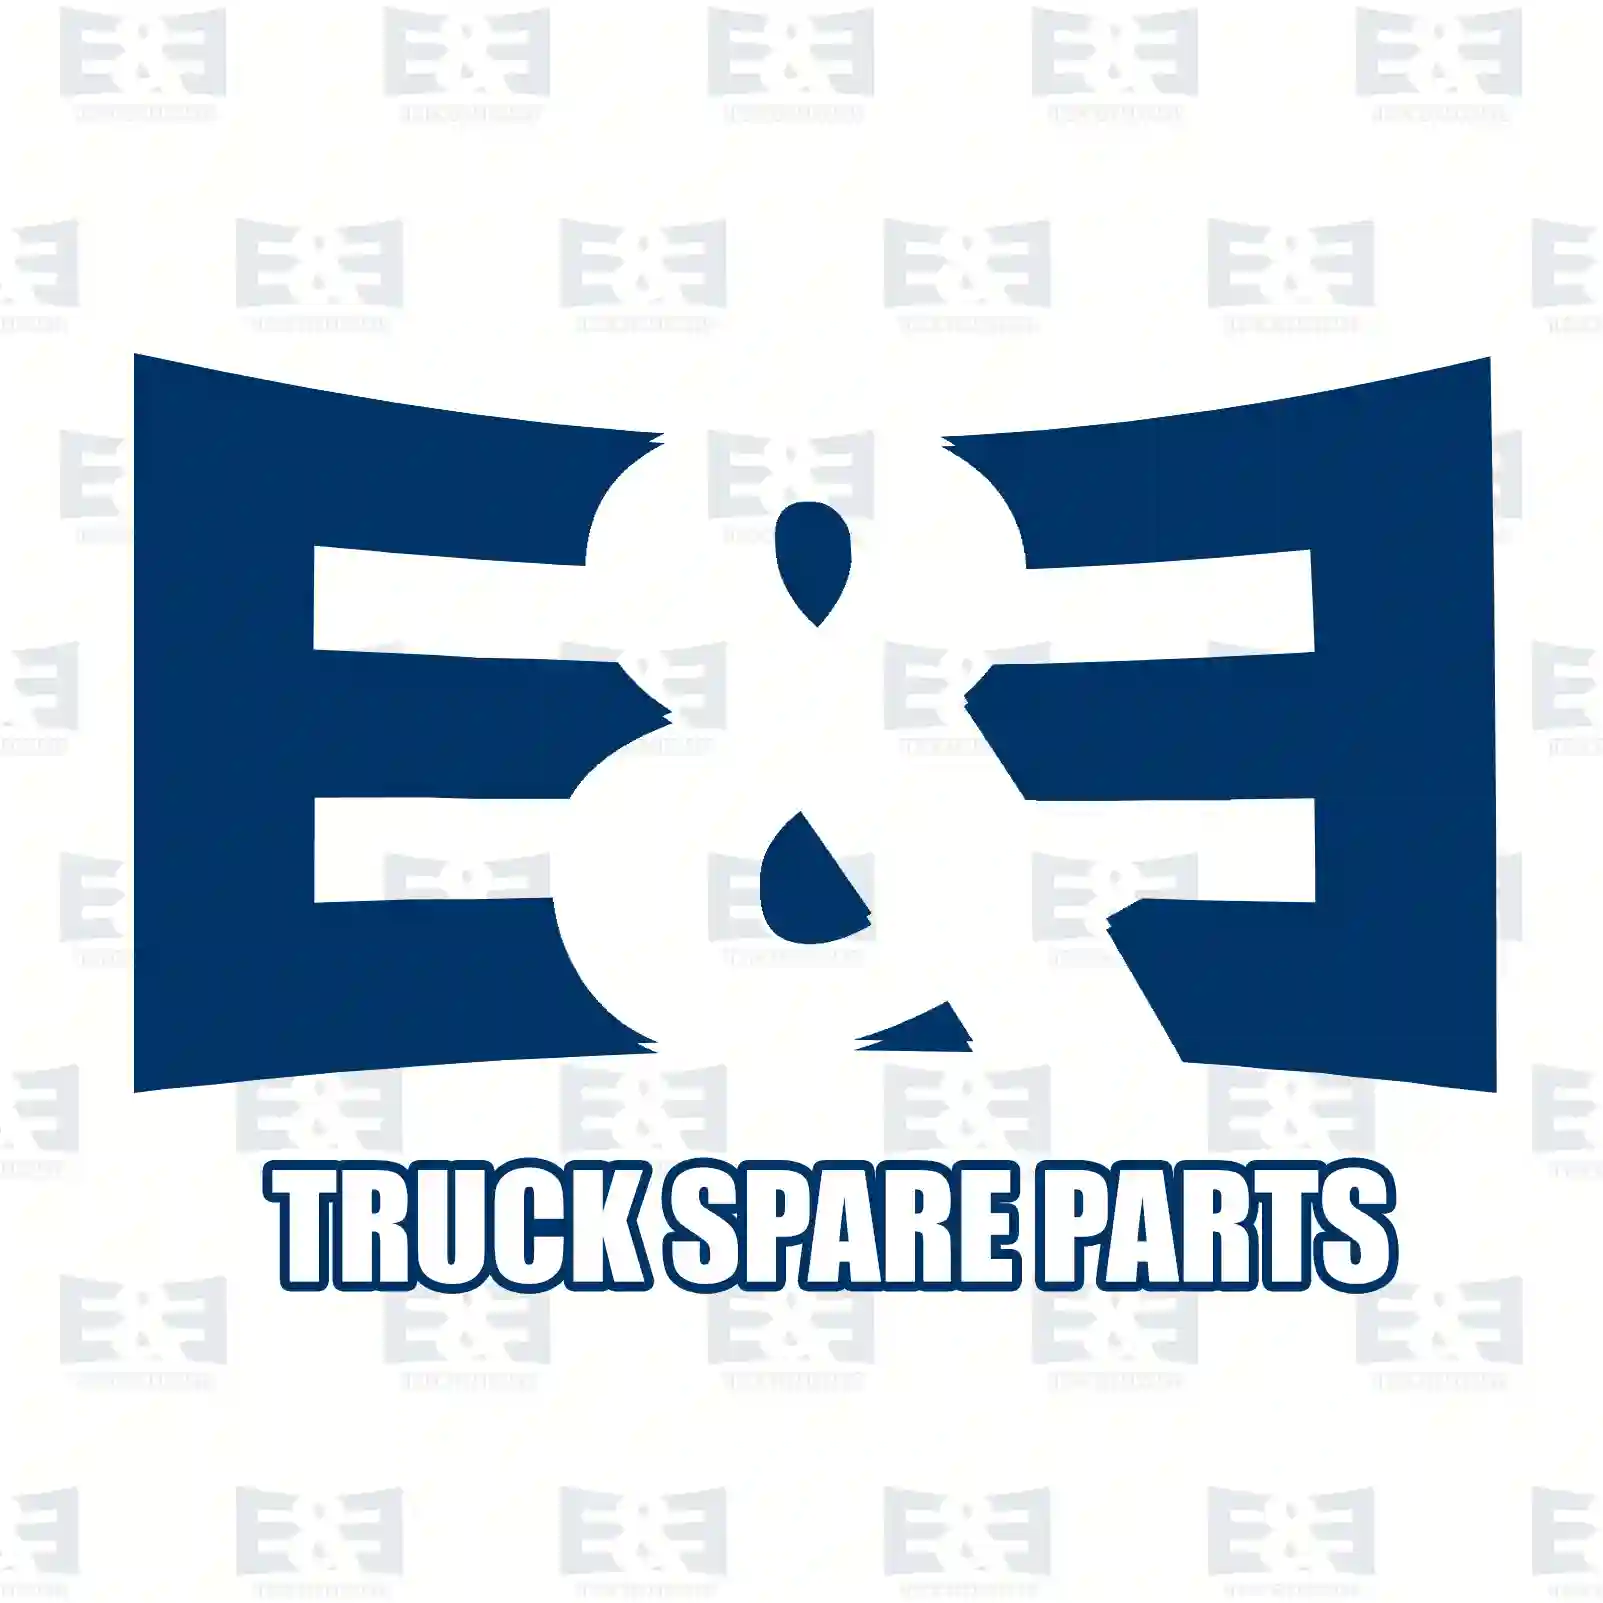 Input shaft, 2E2279994, 1268569, 8132205 ||  2E2279994 E&E Truck Spare Parts | Truck Spare Parts, Auotomotive Spare Parts Input shaft, 2E2279994, 1268569, 8132205 ||  2E2279994 E&E Truck Spare Parts | Truck Spare Parts, Auotomotive Spare Parts